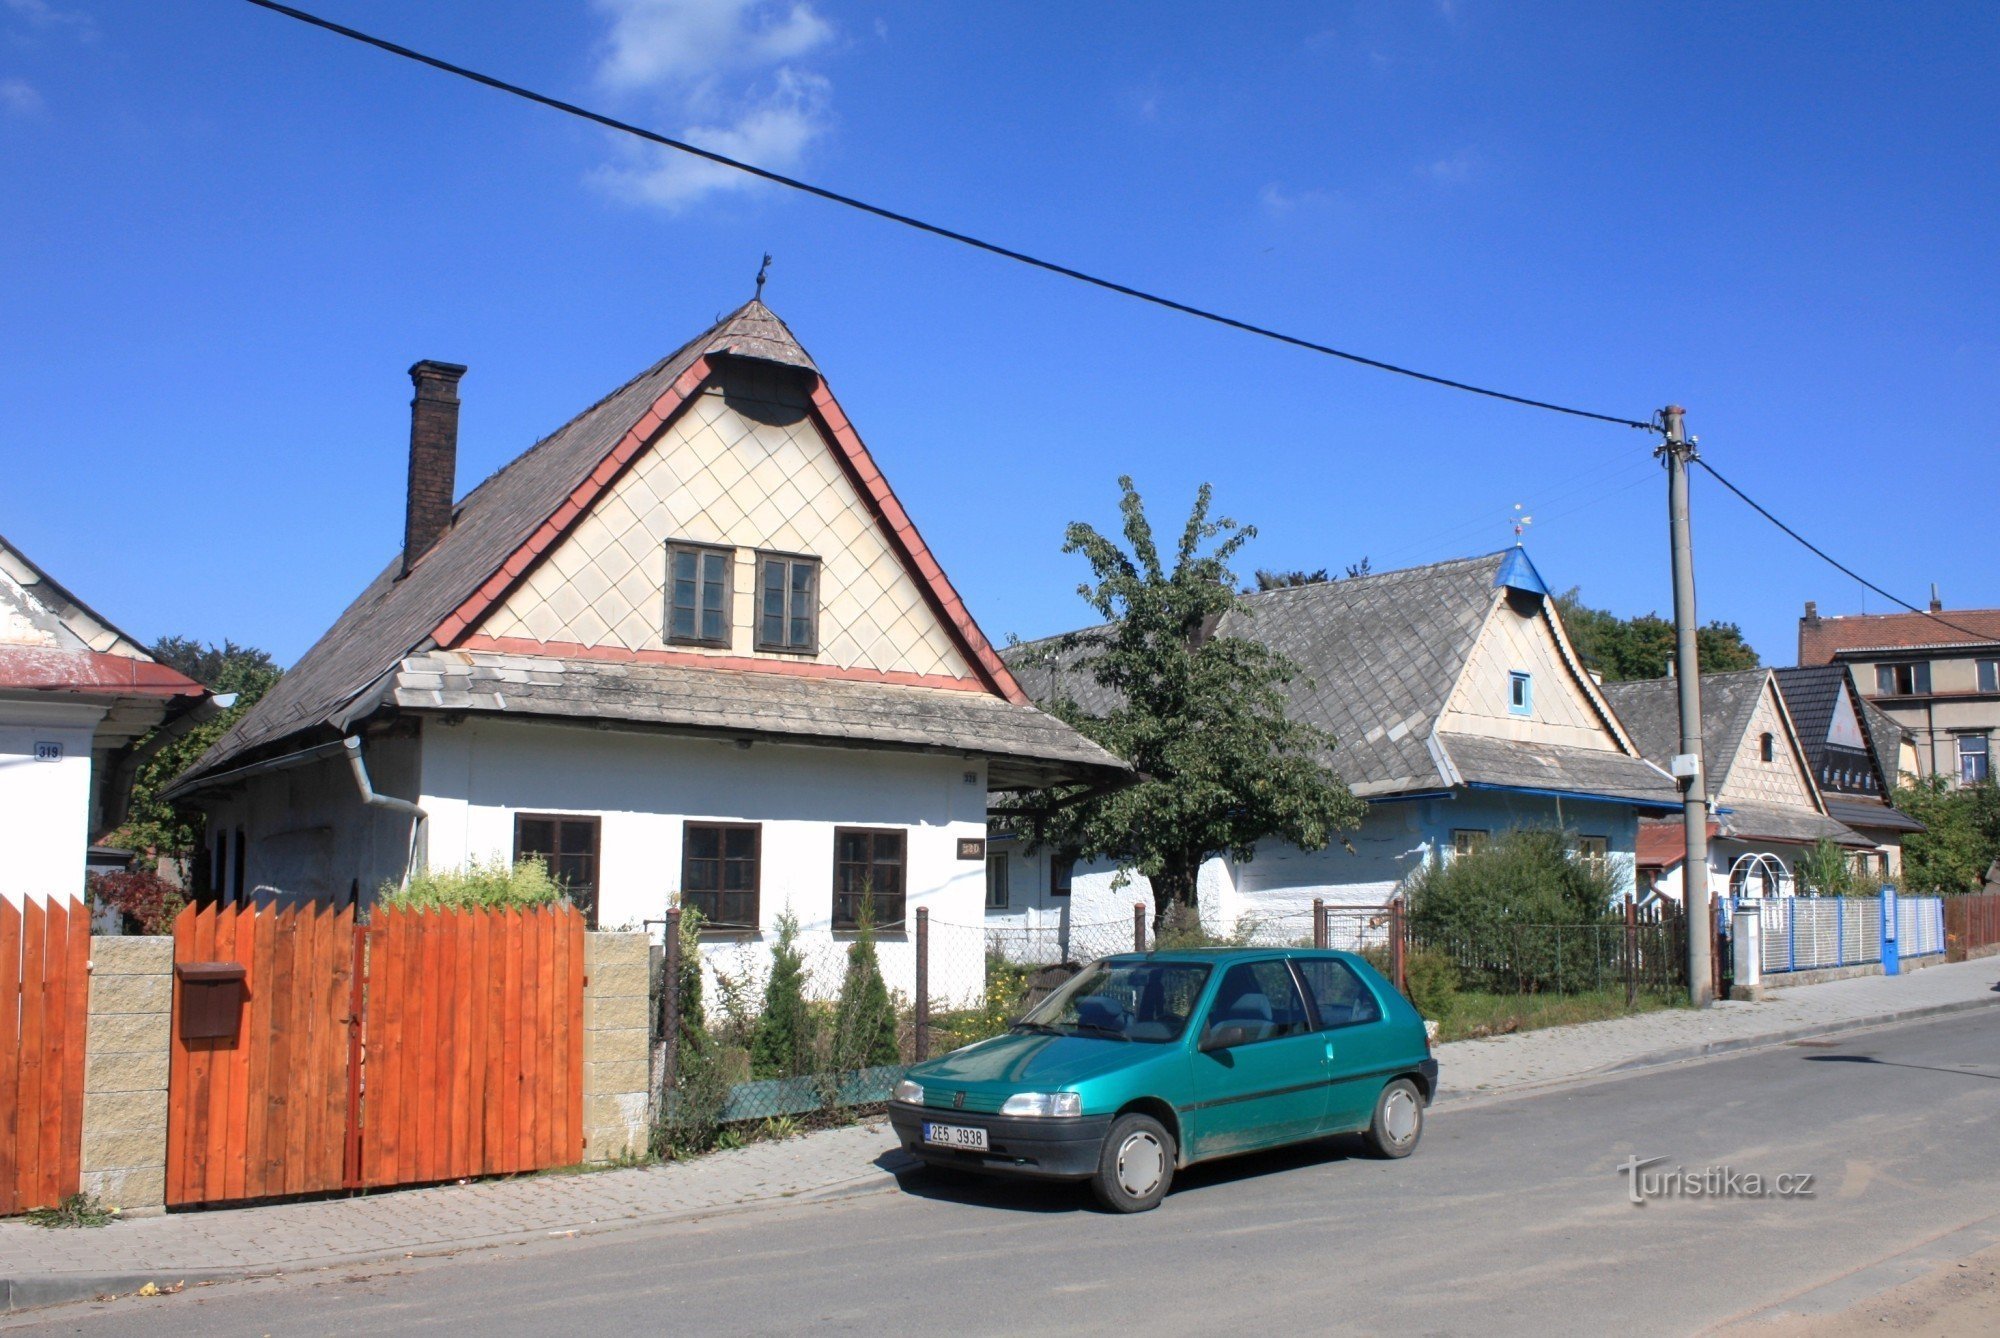 Preserved houses in Podměstí